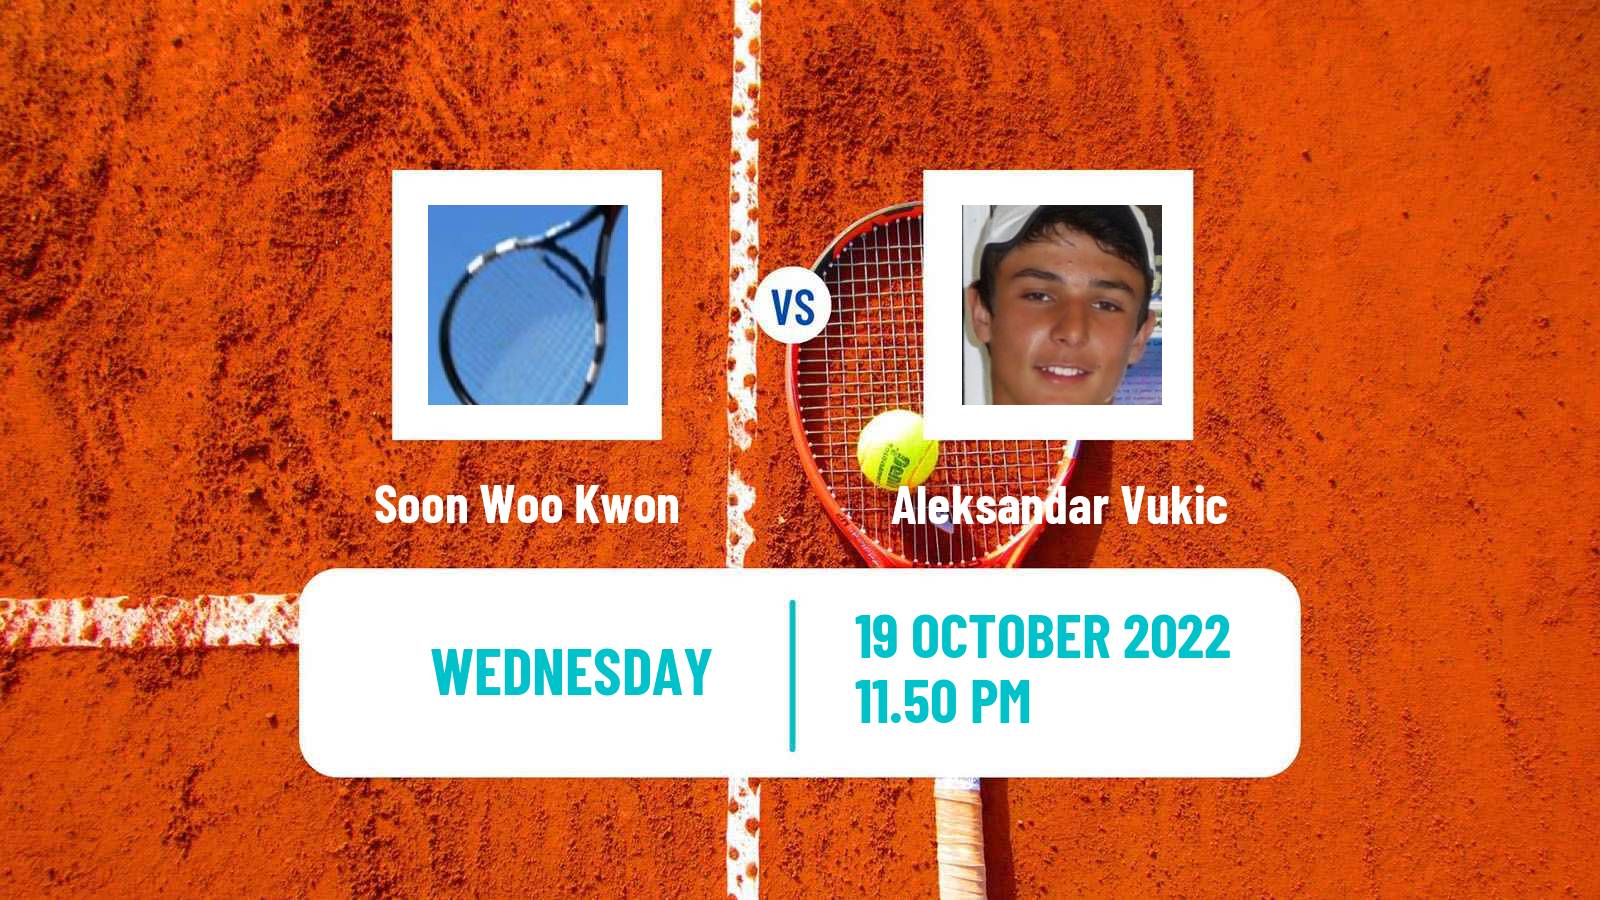 Tennis ATP Challenger Soon Woo Kwon - Aleksandar Vukic